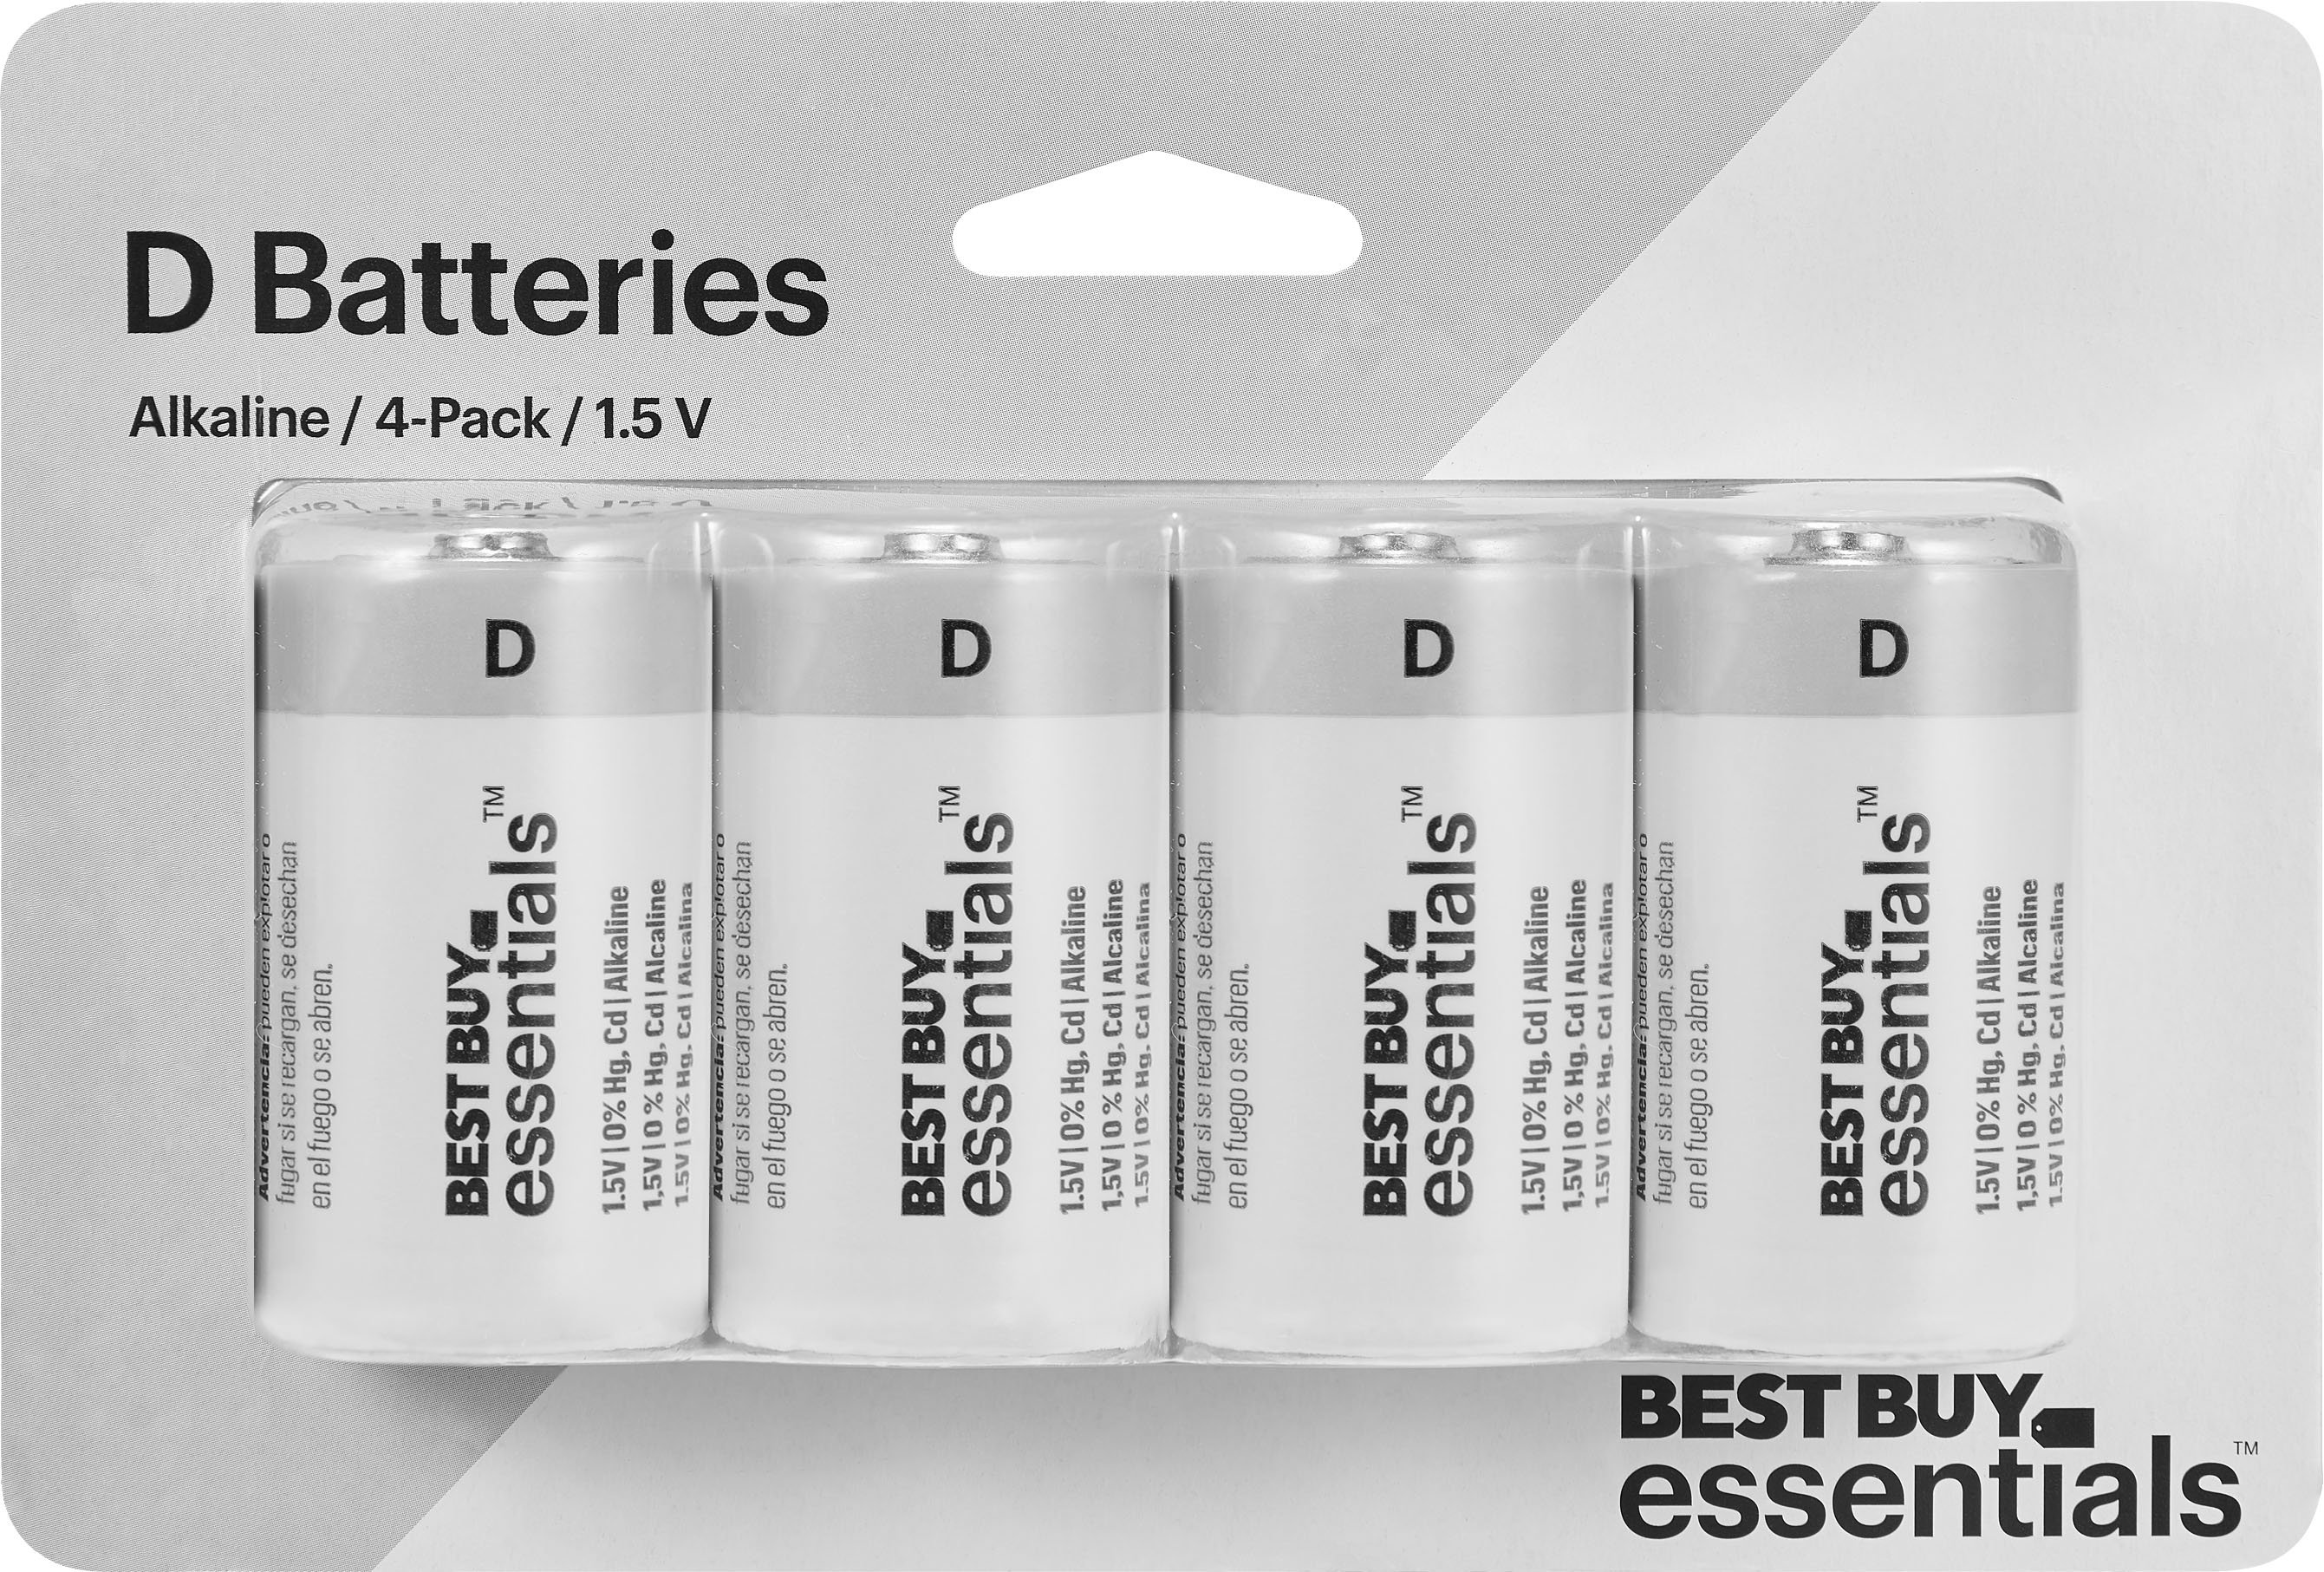 Reduktion Kammerat Modstander Best Buy essentials™ D Batteries (4-Pack) BE-BD4PK - Best Buy